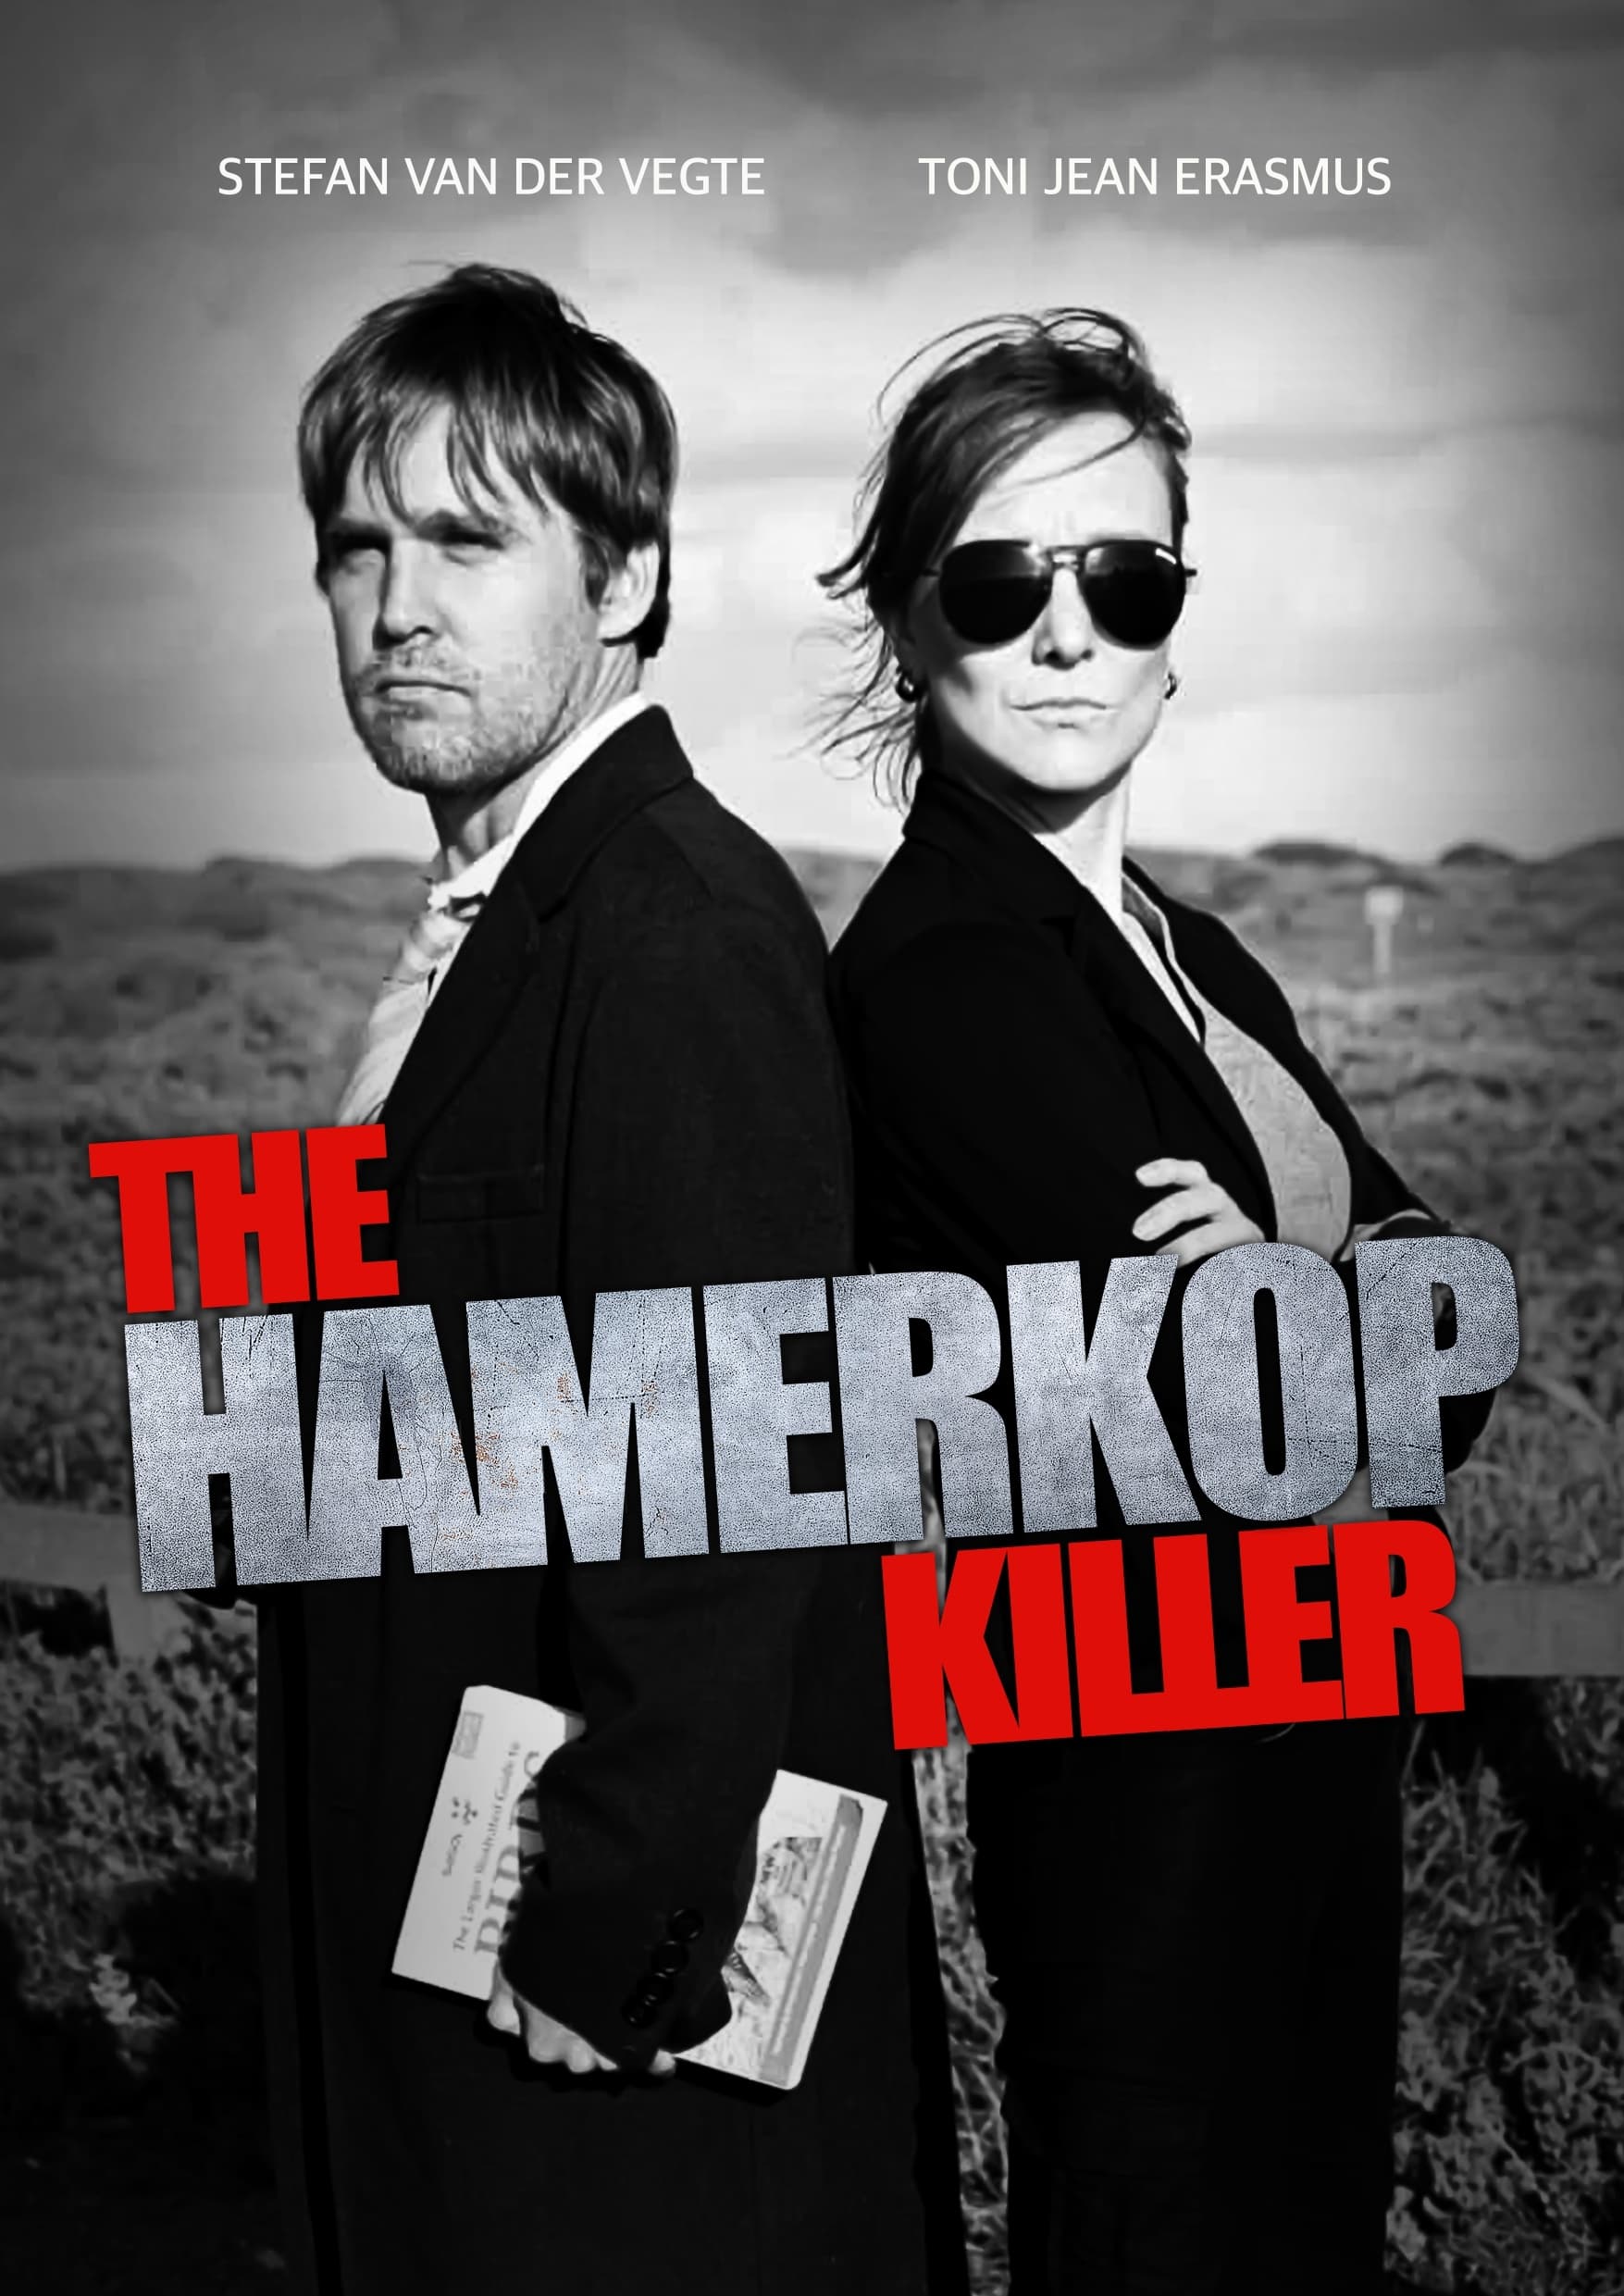 The Hamerkop Killer